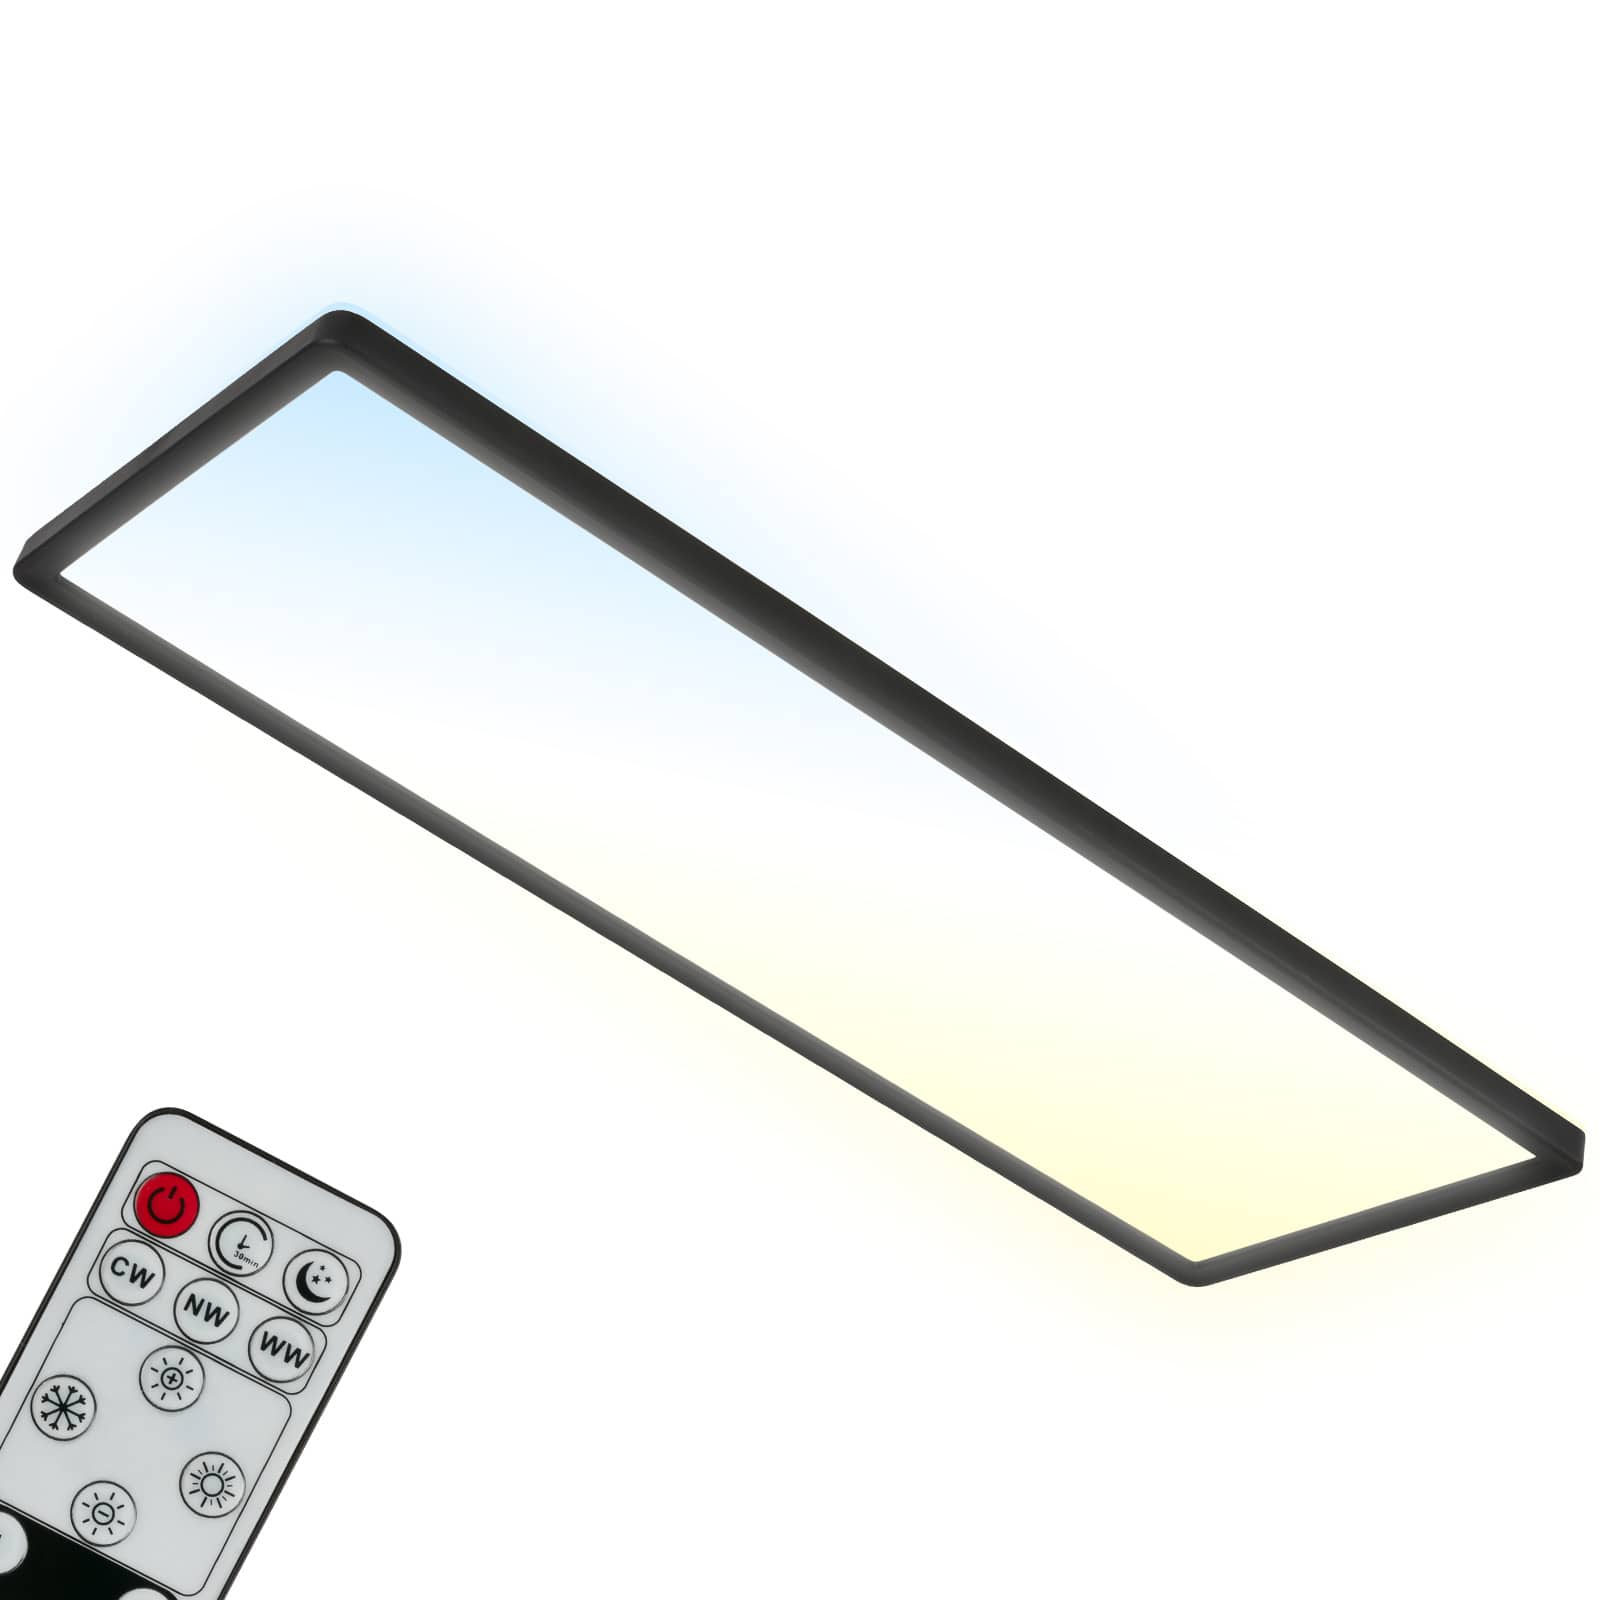 Ultraflaches CCT LED Panel, 29,3 cm, LED, 23 W, 3000 lm, schwarz